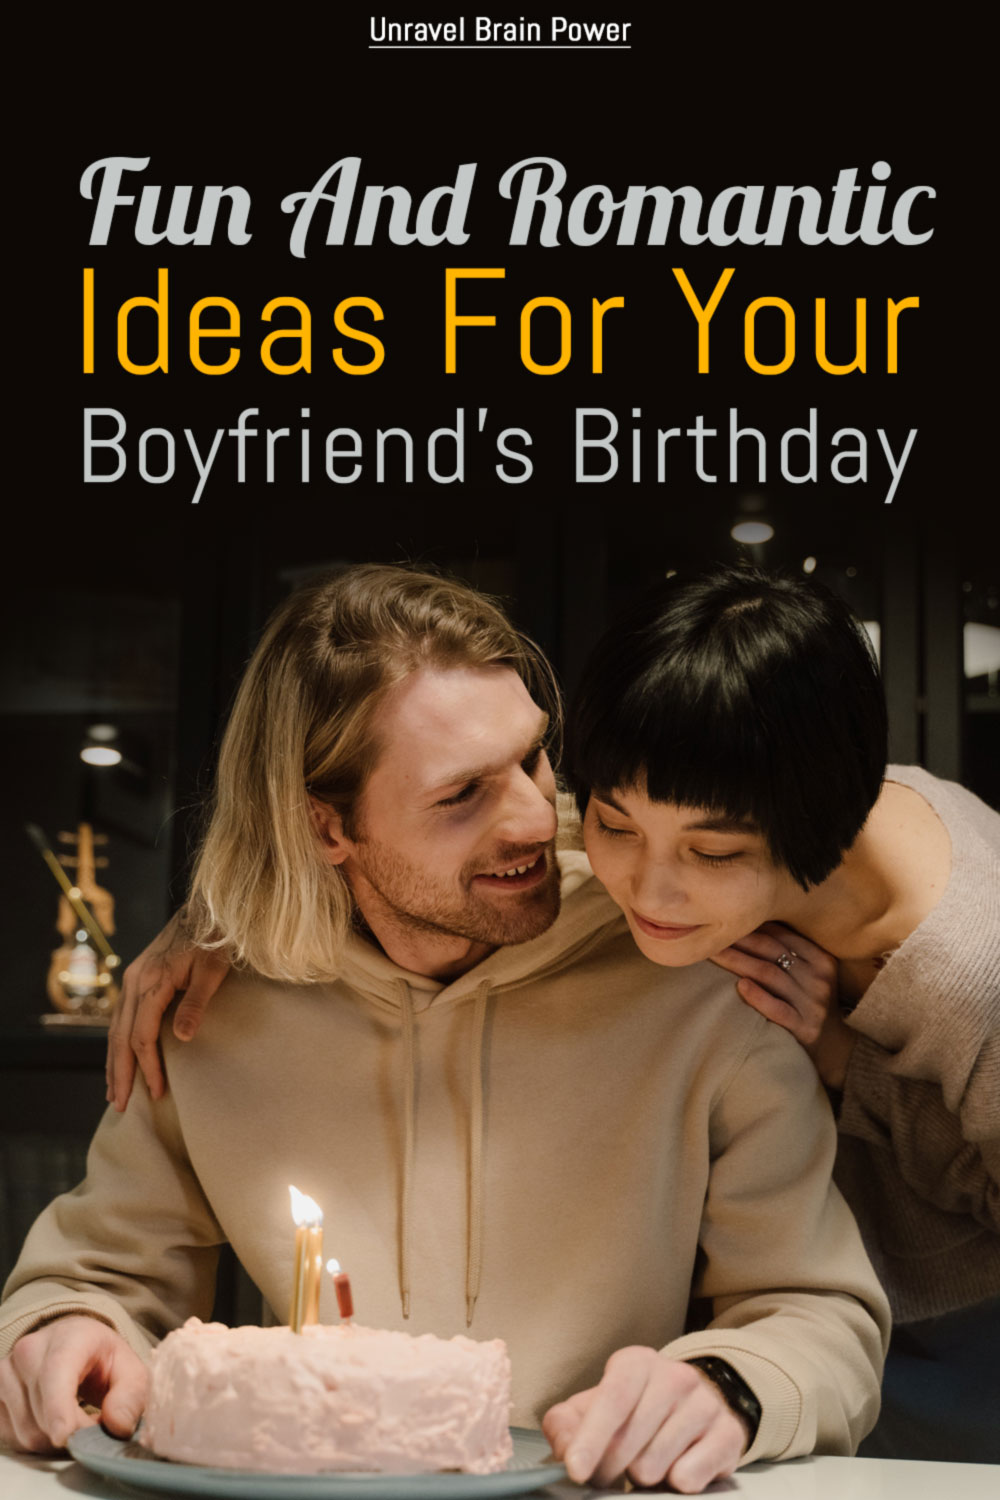 6 Fun And Romantic Ideas For Your Boyfriend's Birthday